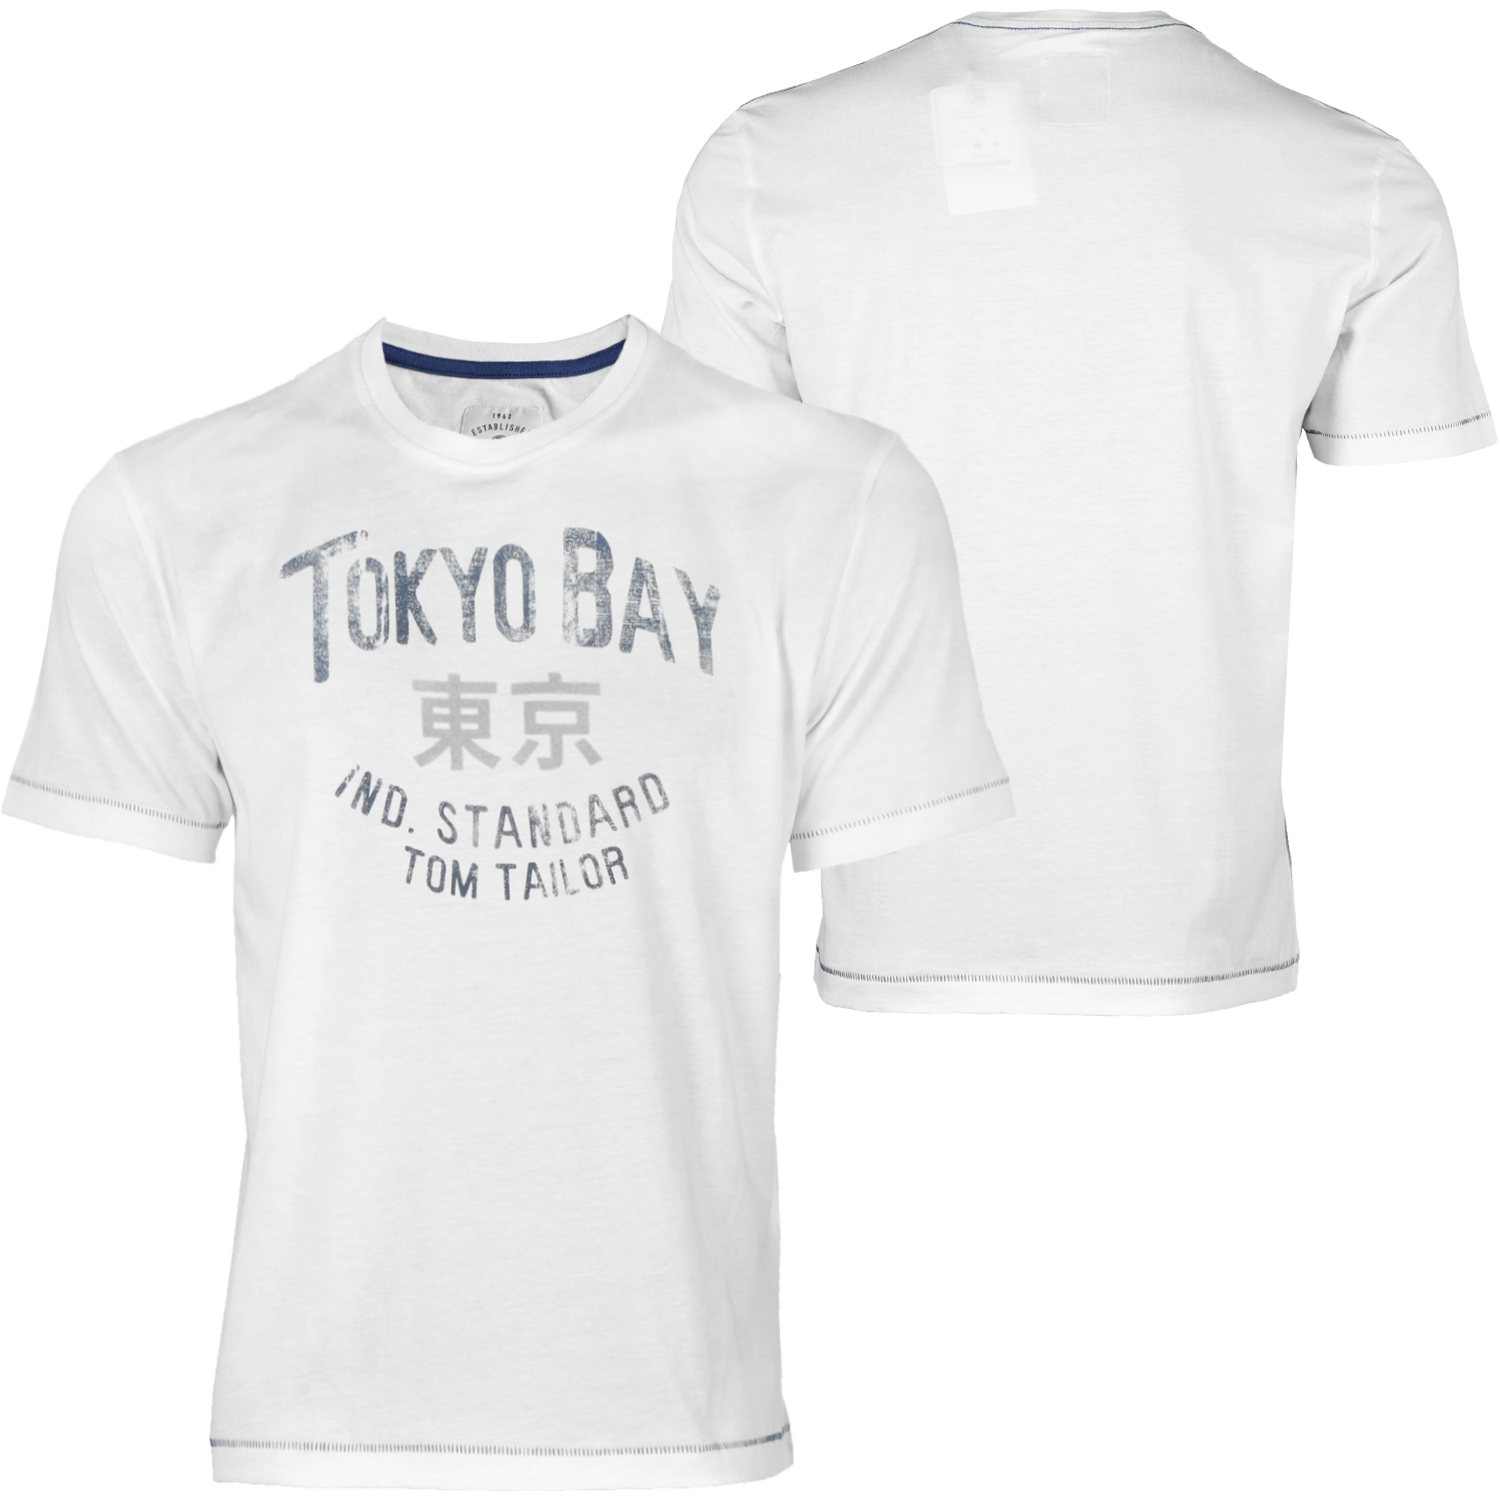 Foto Tom Tailor Tokyo Bay T-shirt Blanco